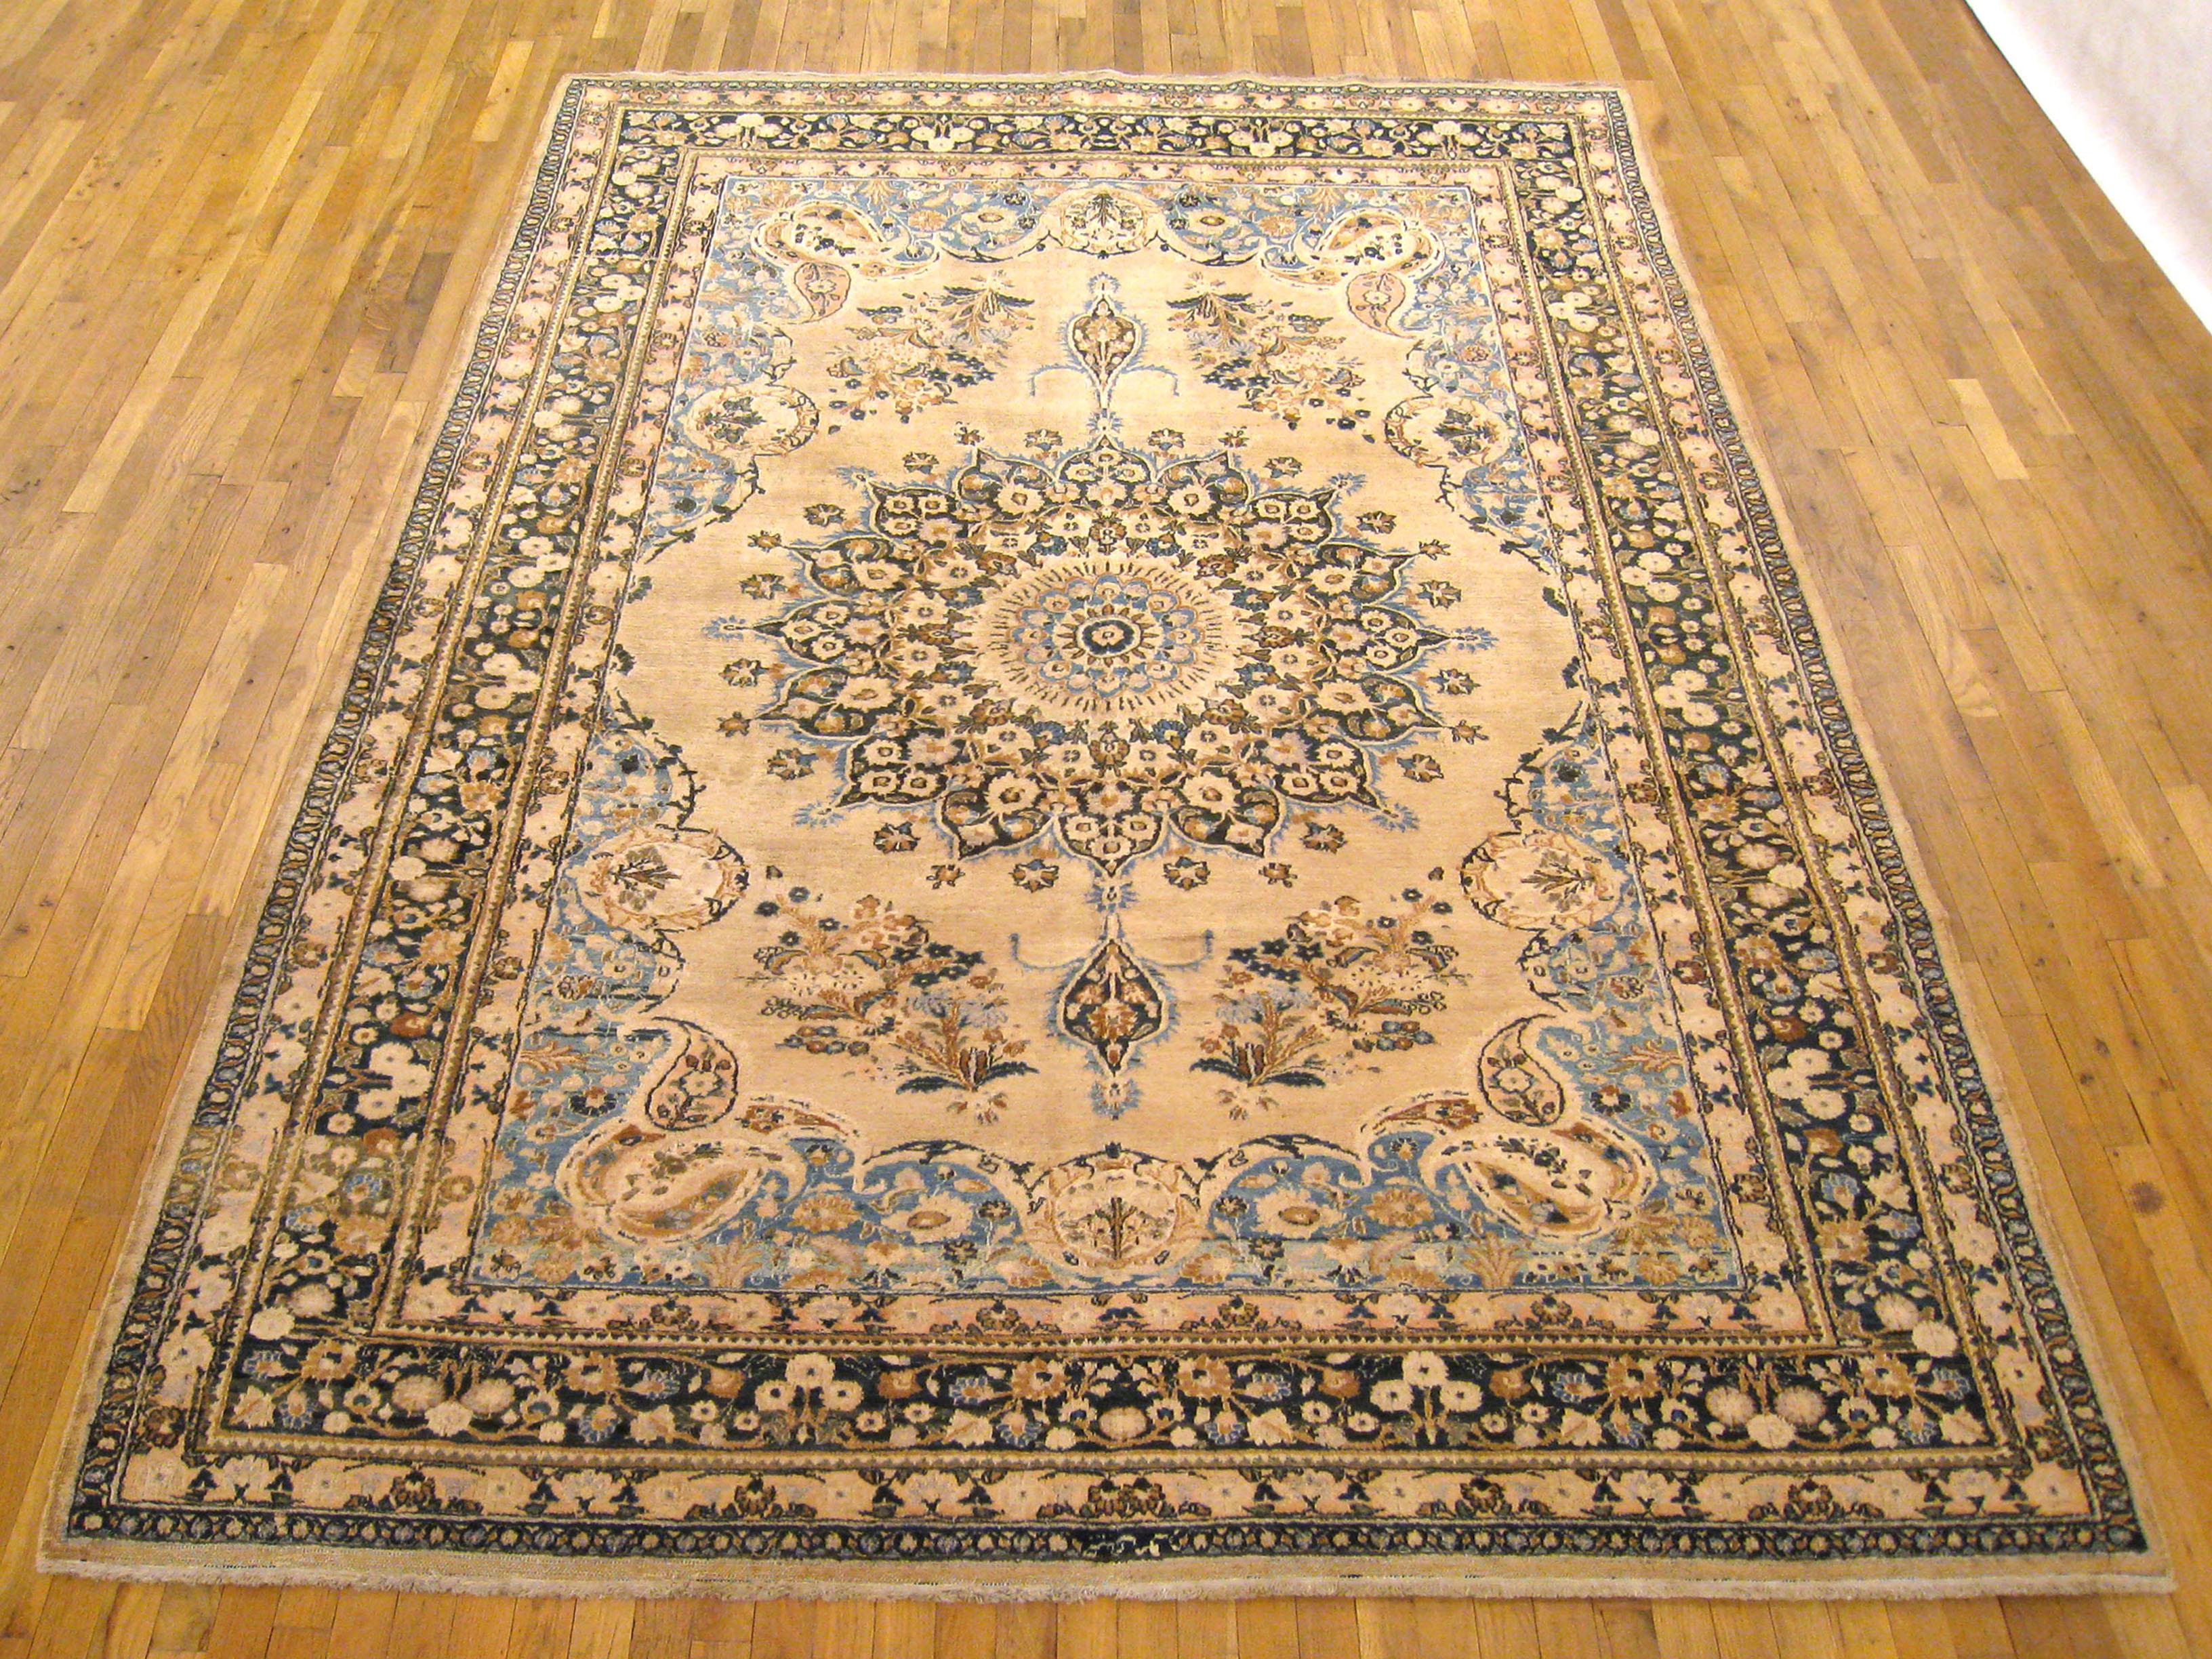 Vintage Persian meshed oriental rug, room size.

A vintage Persian Meshed oriental rug, size 10'5